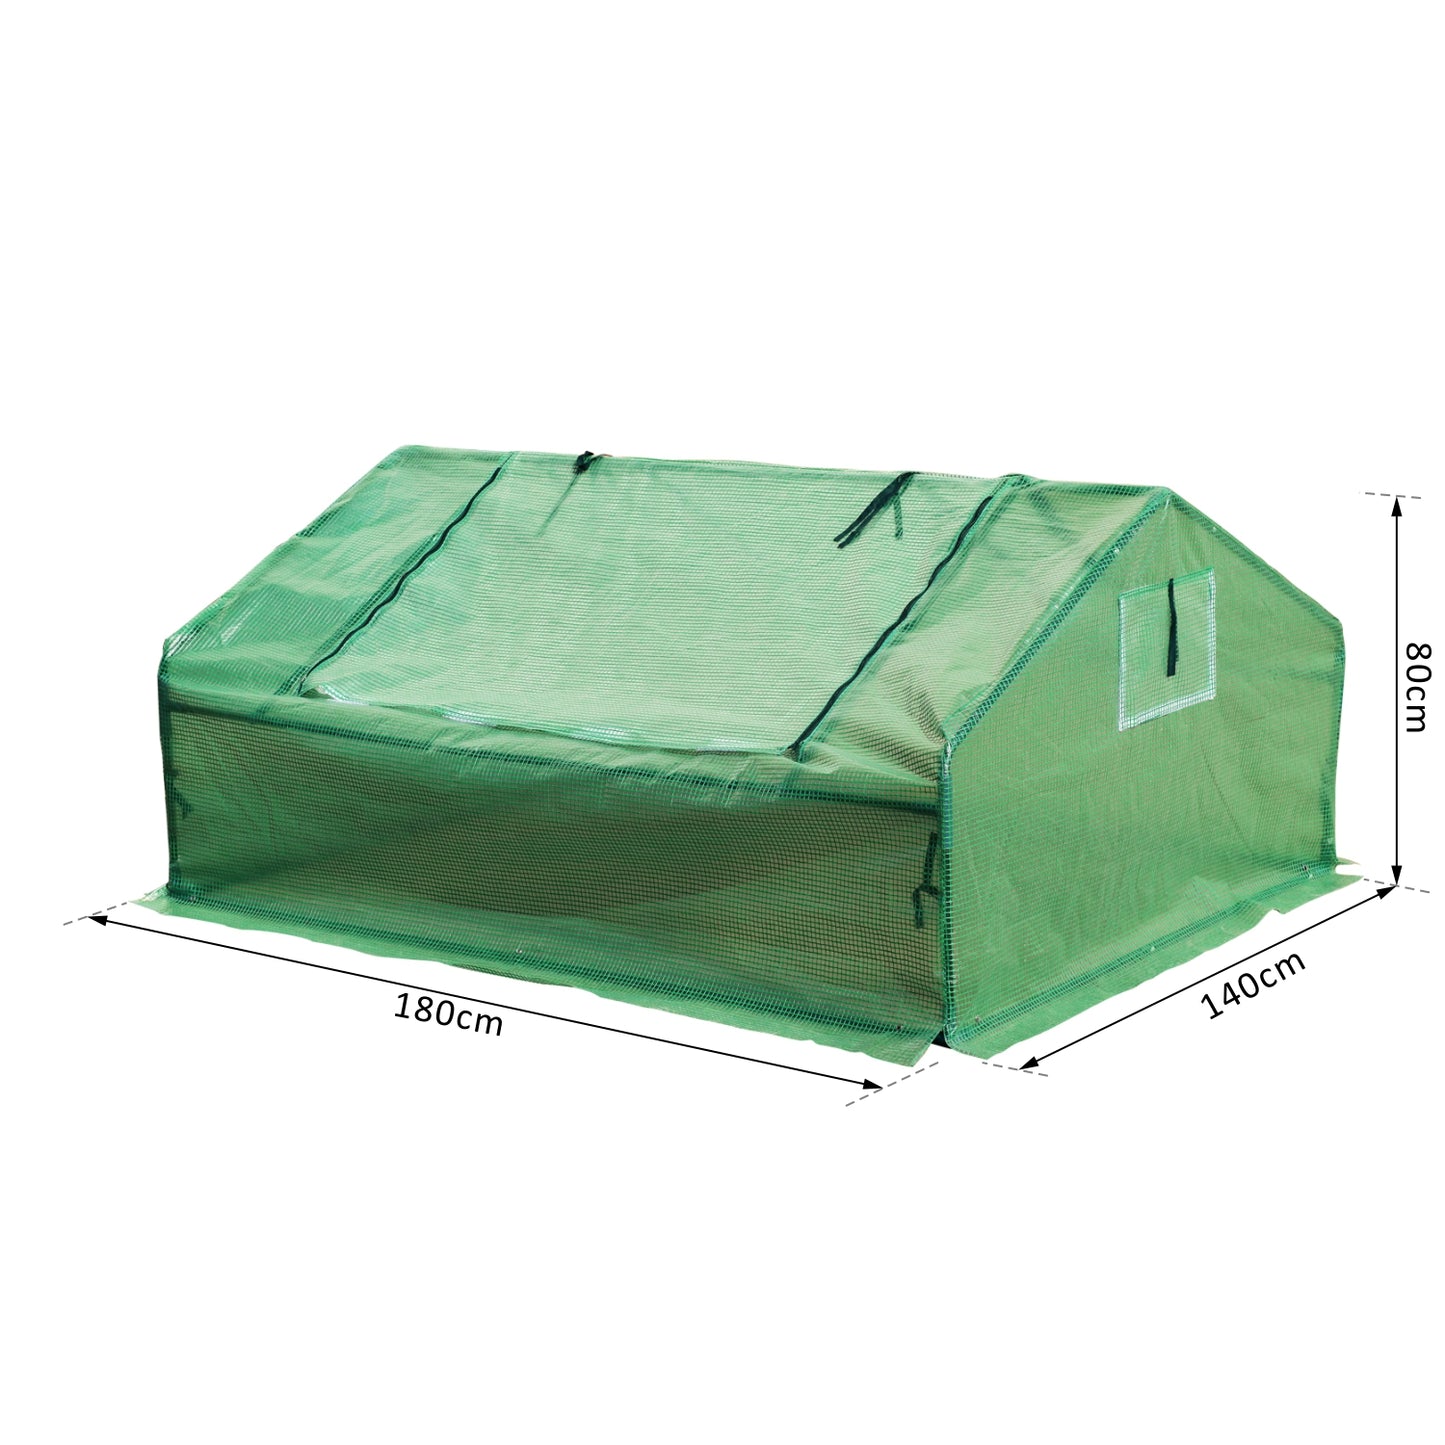 Outsunny 180Lx140Wx80H cm Portable Greenhouse-Dark Green